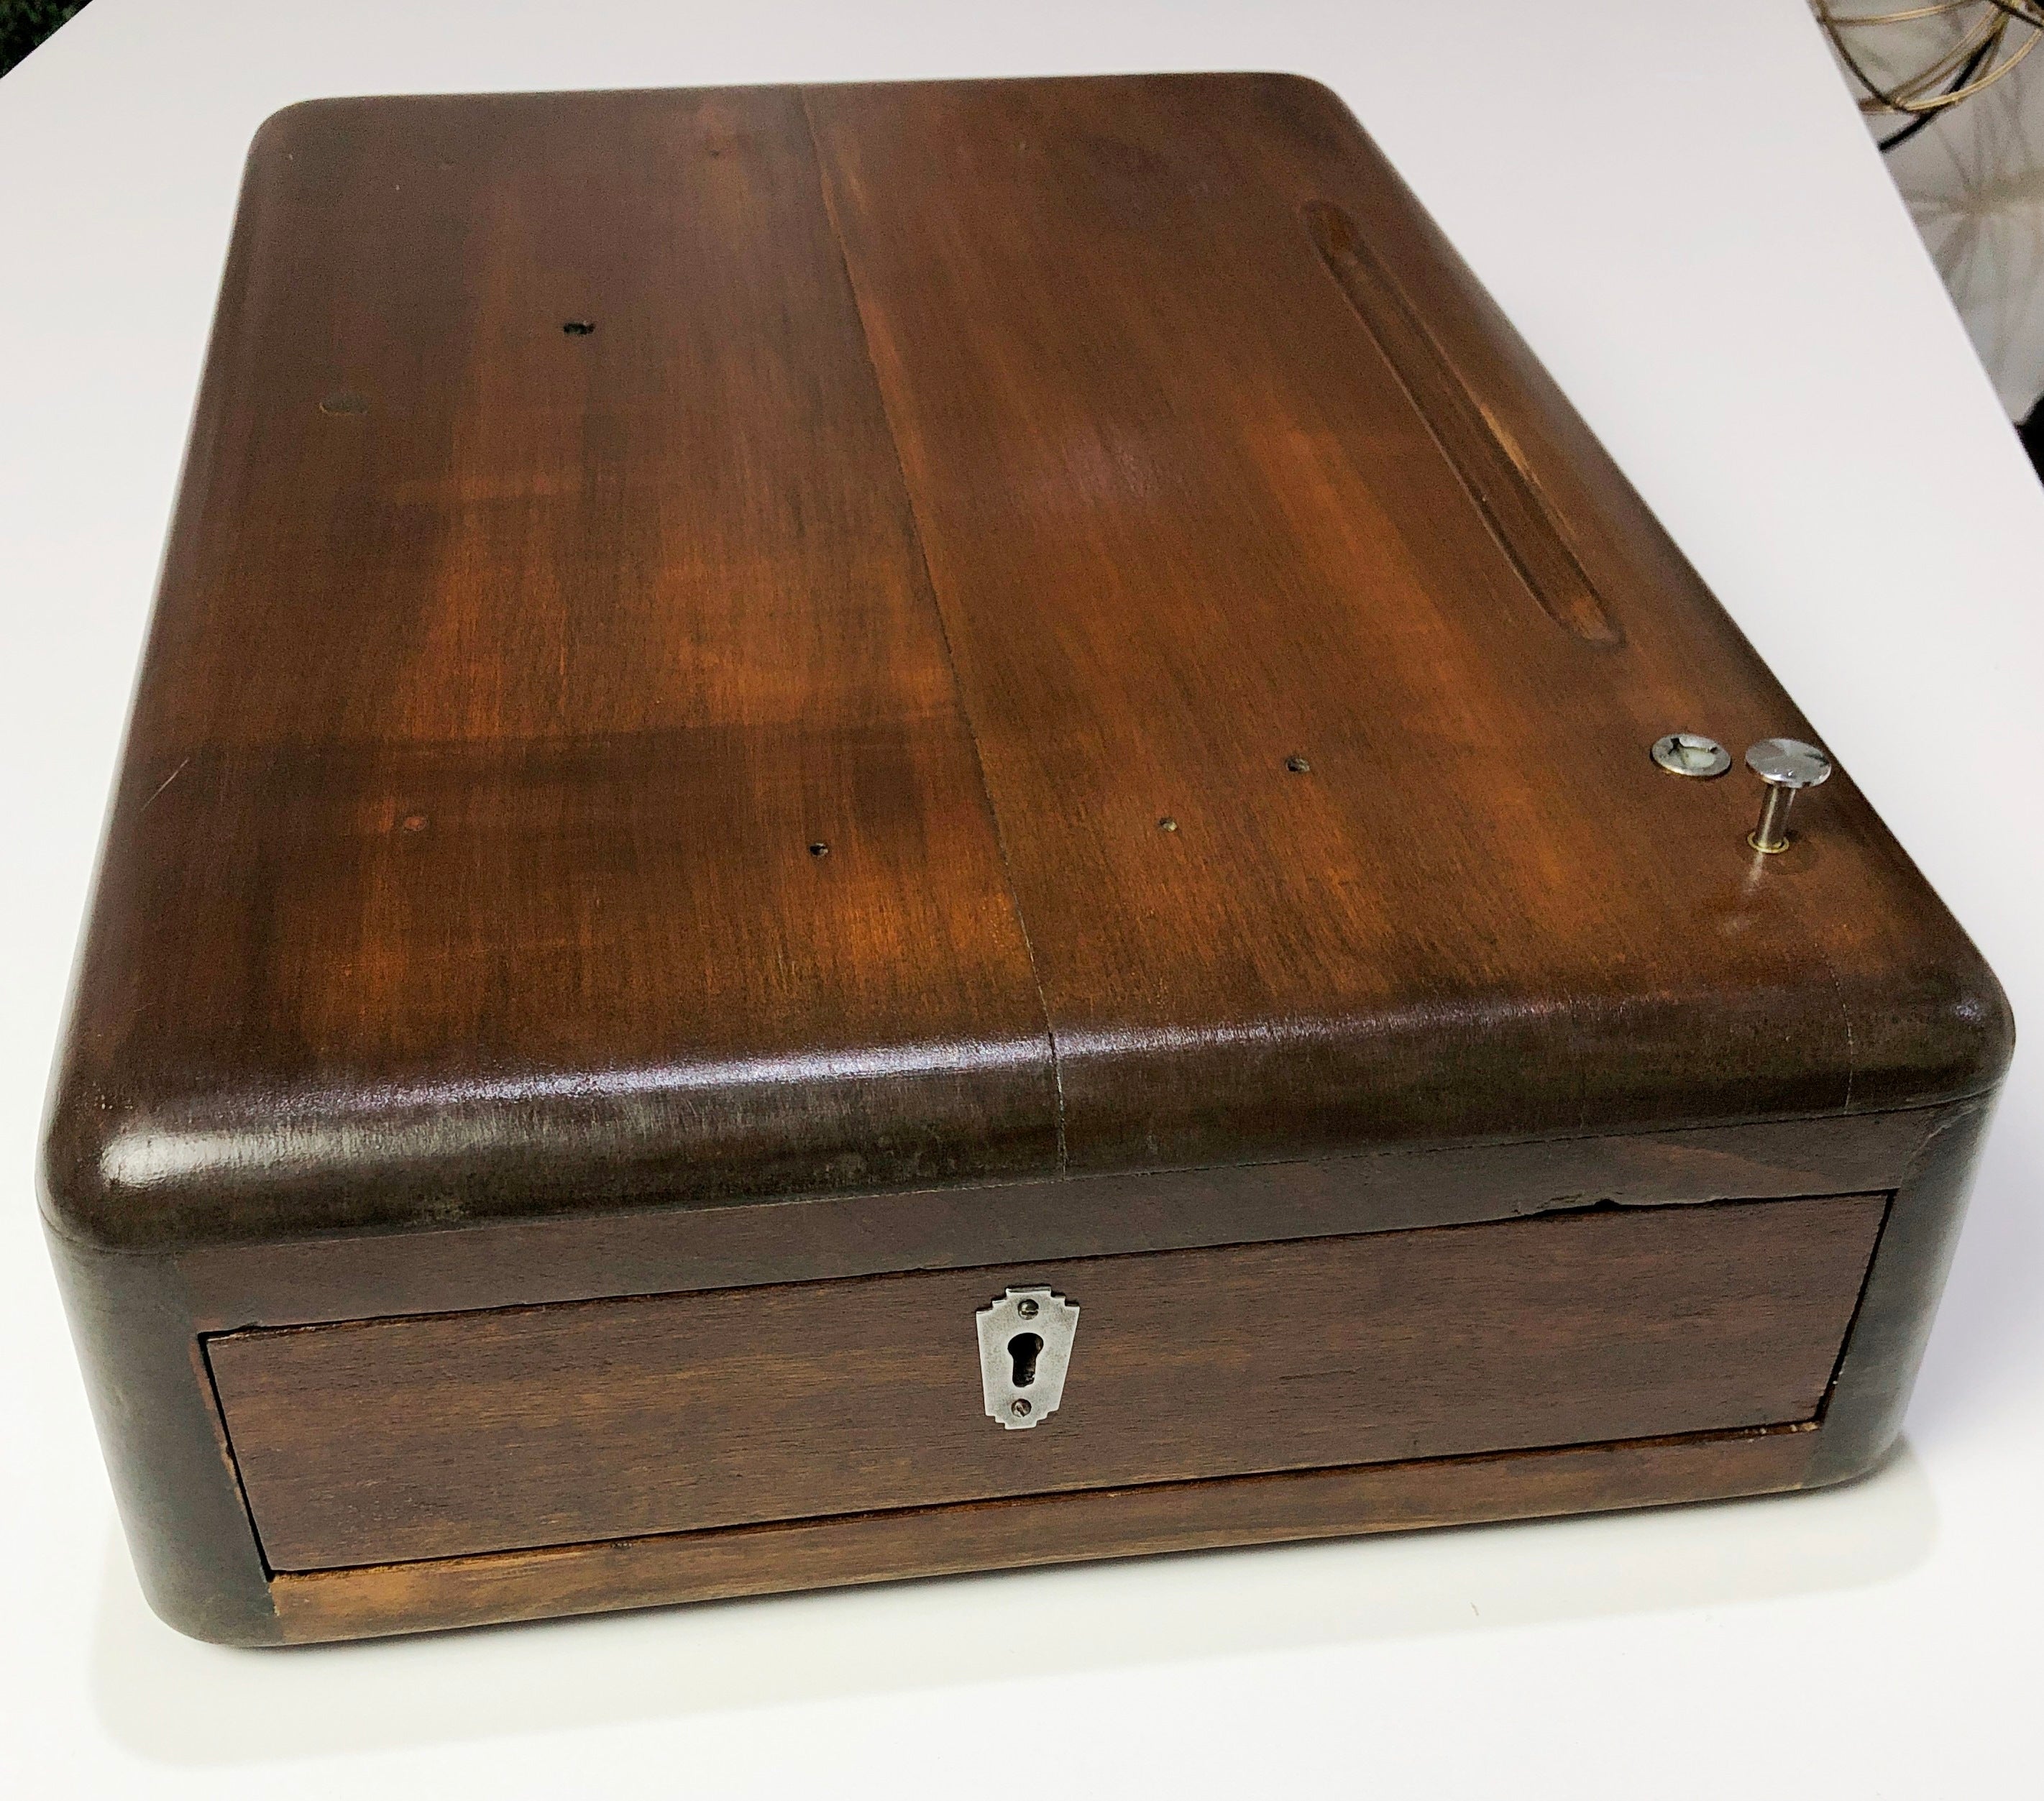 Vintage Wooden Cash Register Draw | eXibit collection